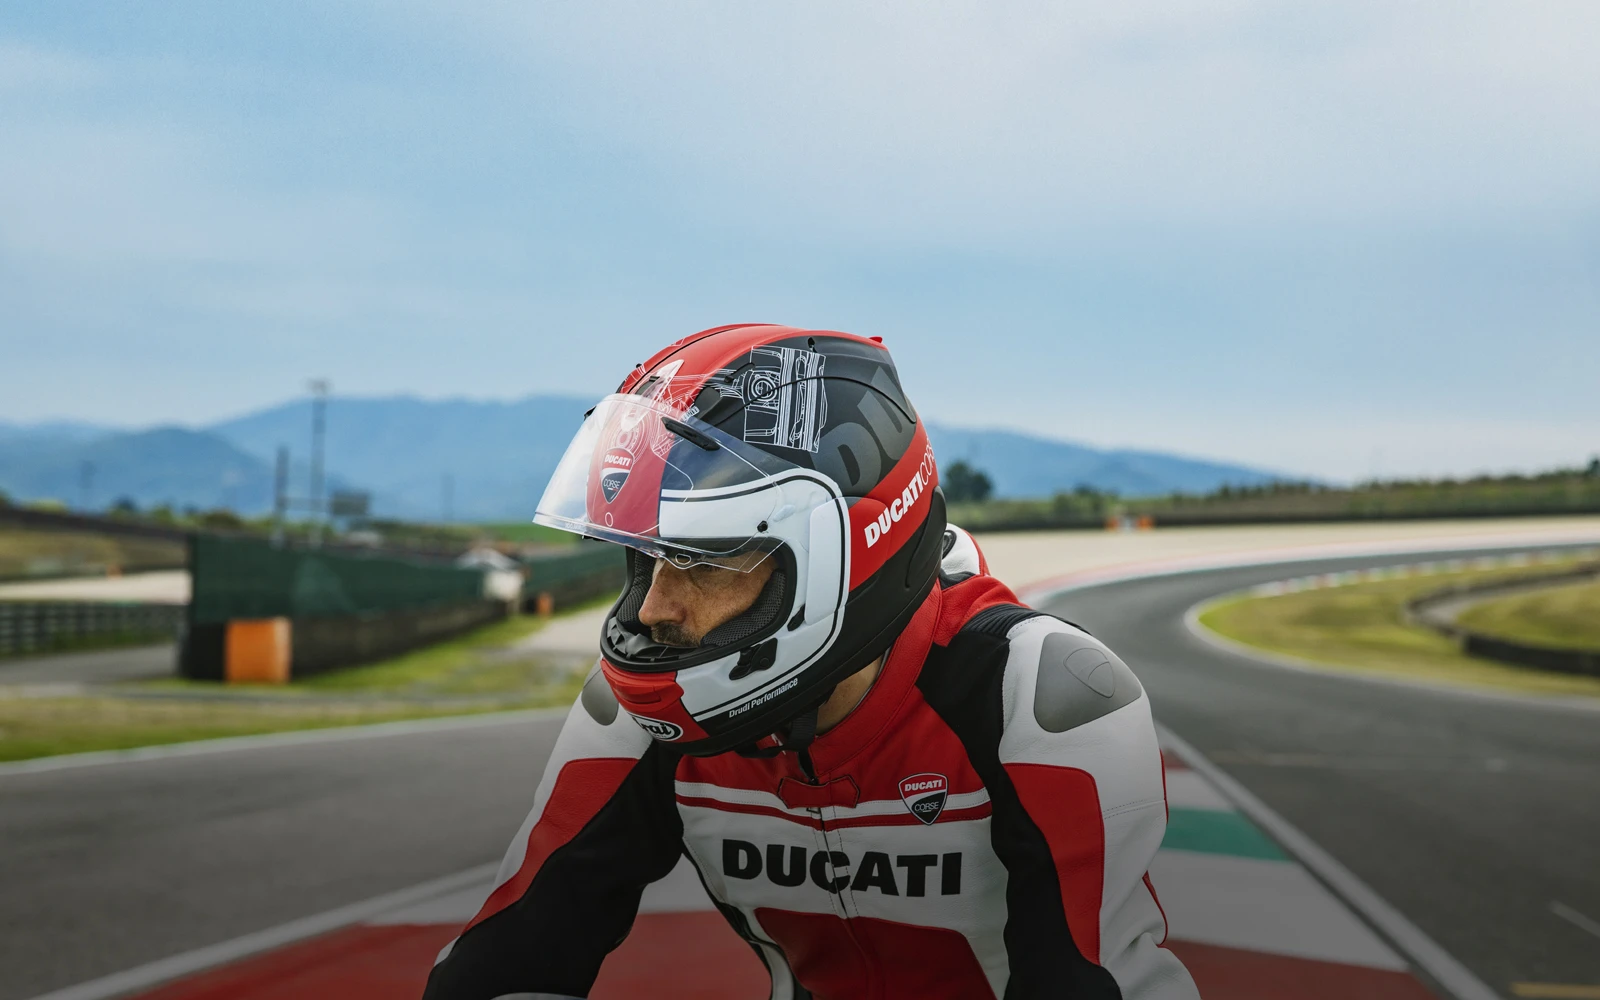 Reflex Attitude Jacket - Ducati of Santa Barbara